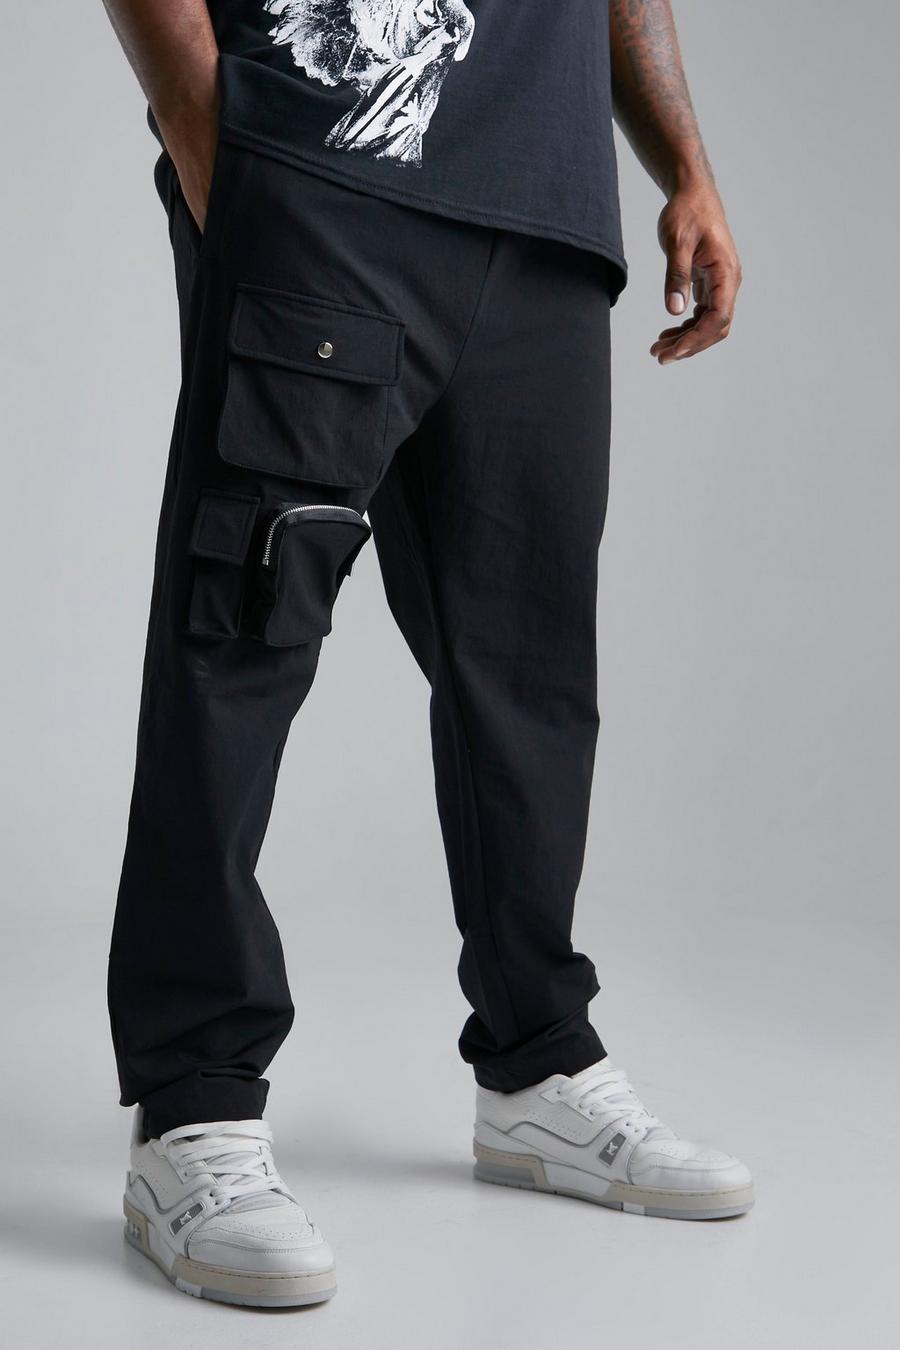 Plus Slim-Fit Hose mit Reißverschluss-Detail, Black noir